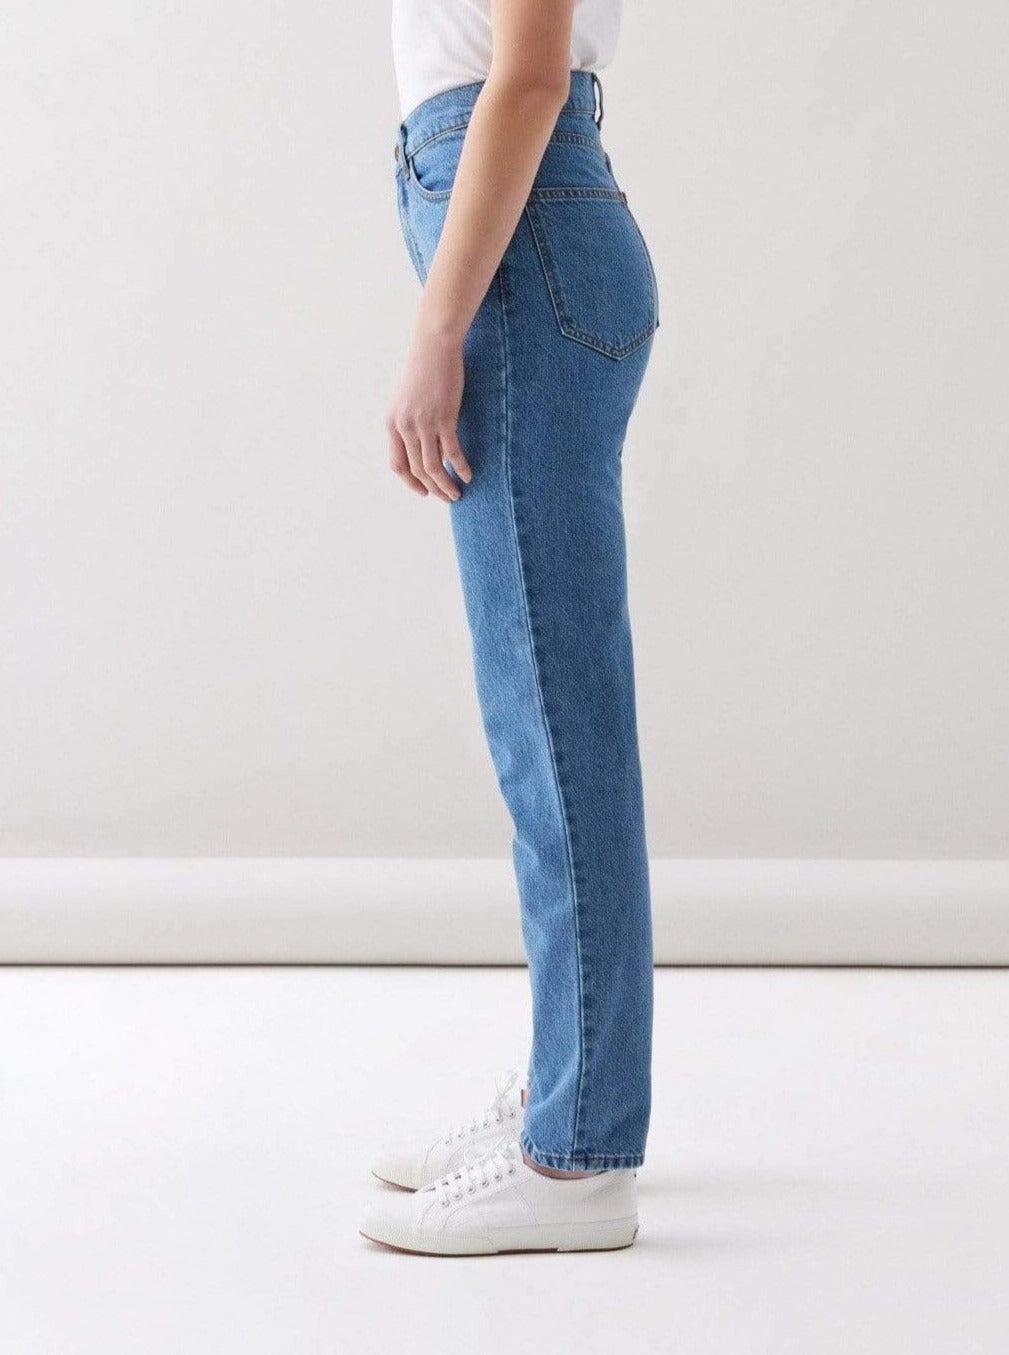 Par.co DENIM Woman Jeans Rose Light Straight Jeans bæredygtig mode etisk mode